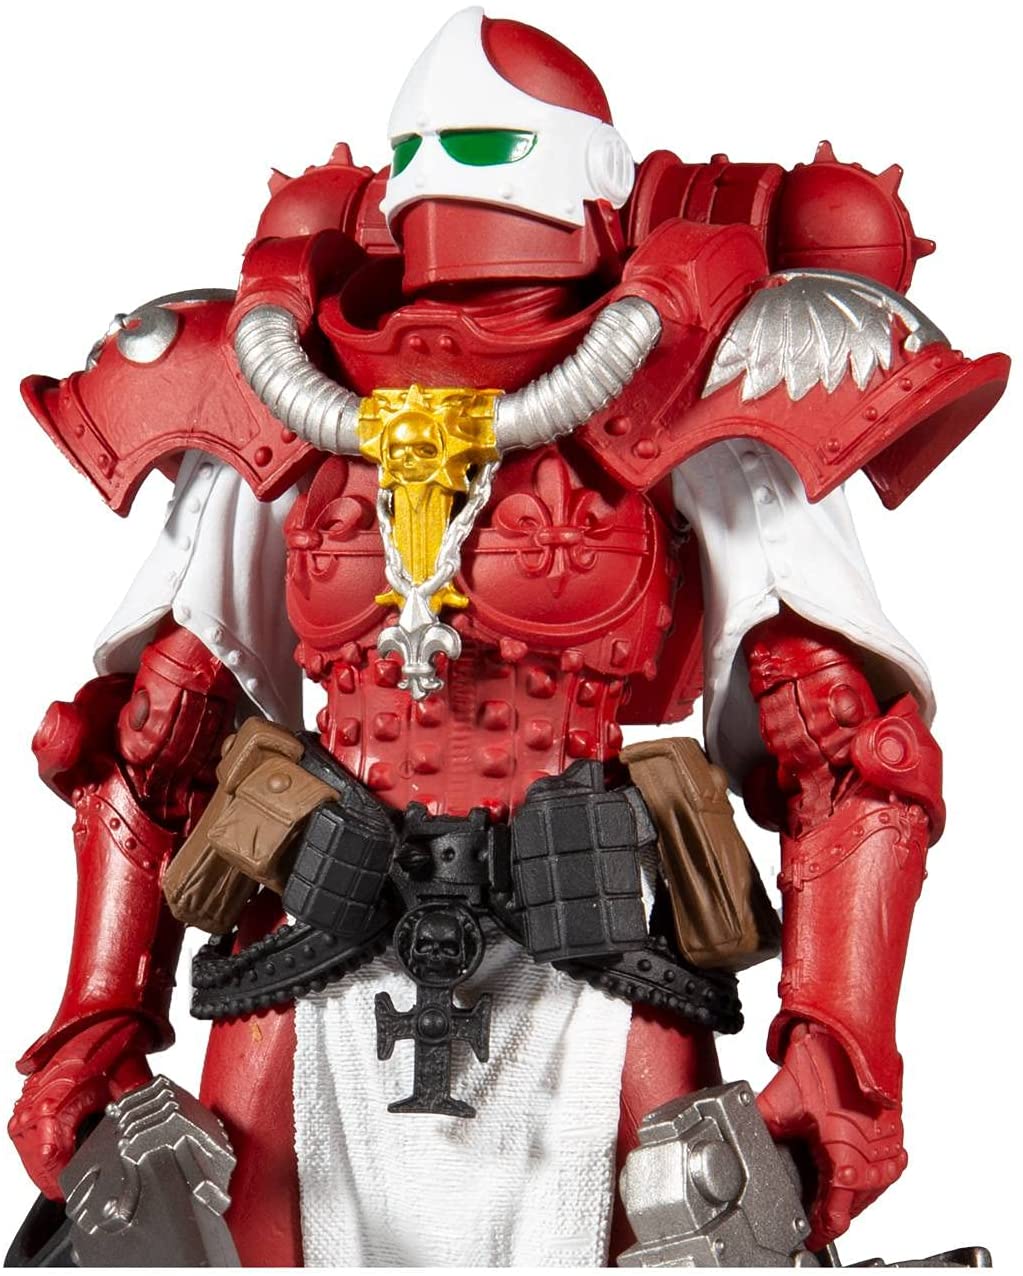 McFarlane Toys - Warhammer 40,000 - Adepta Sororitas Battle Sister (The Order of The Bloody Rose) 7" Action Figure, Multicolor